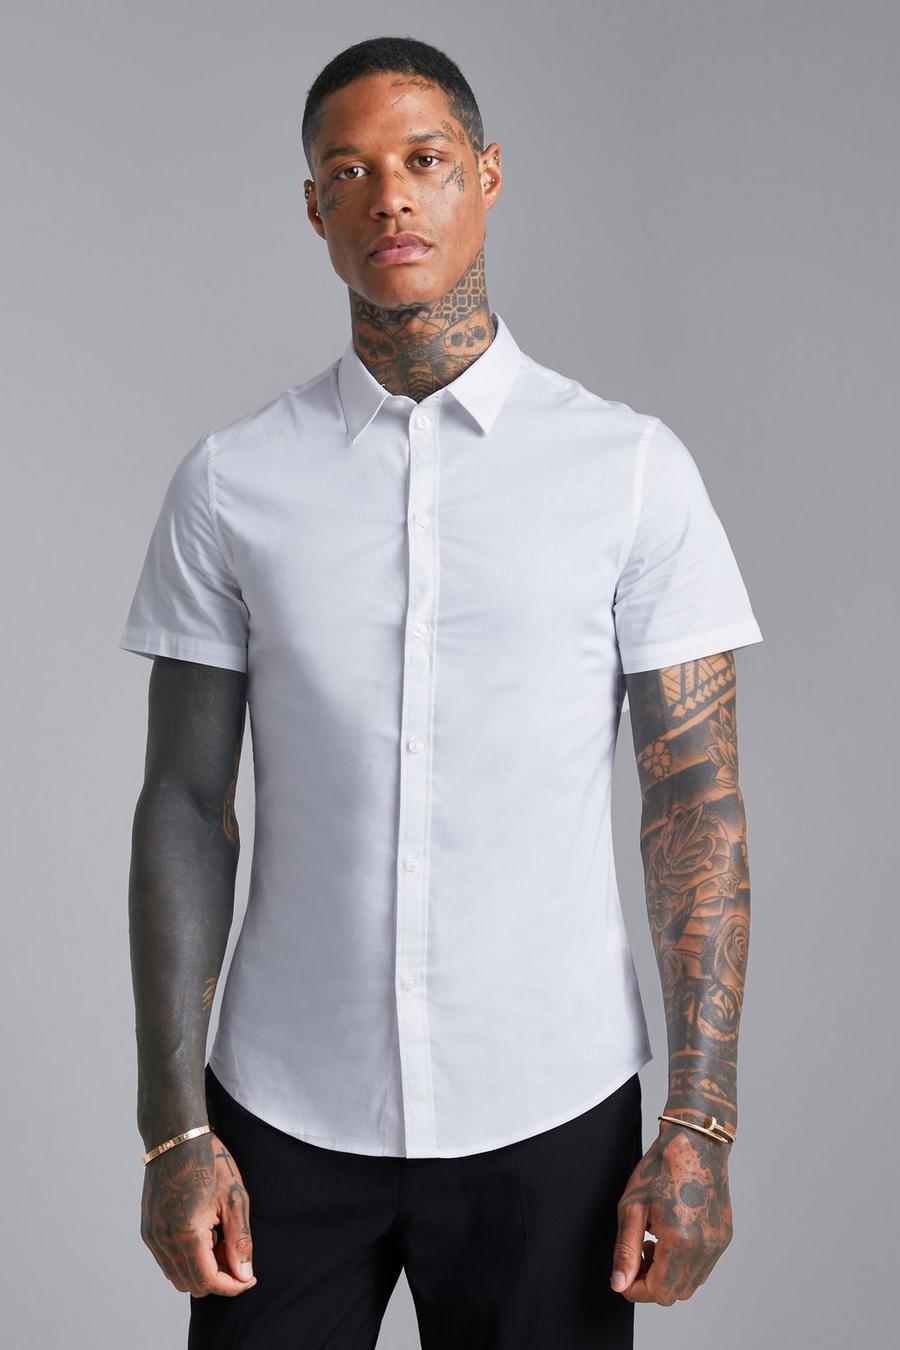 White Eterna langarm hemd regular fit upcycling shirt oxford blau bedruckt